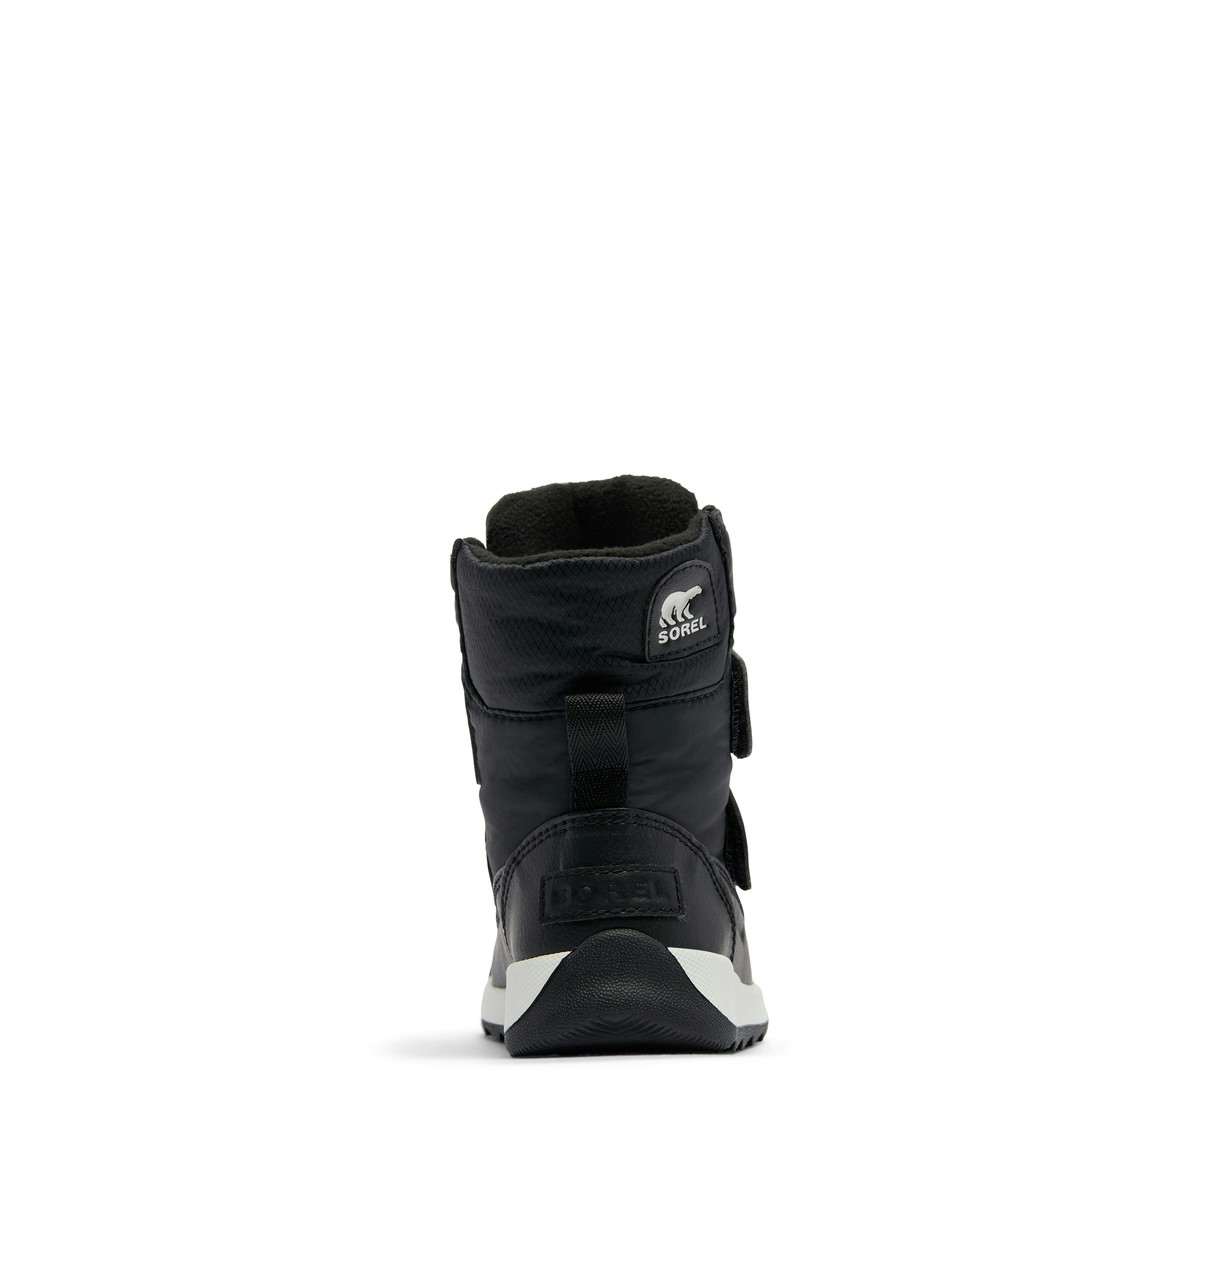 Whitney II Strap Boots Black/Sea Salt